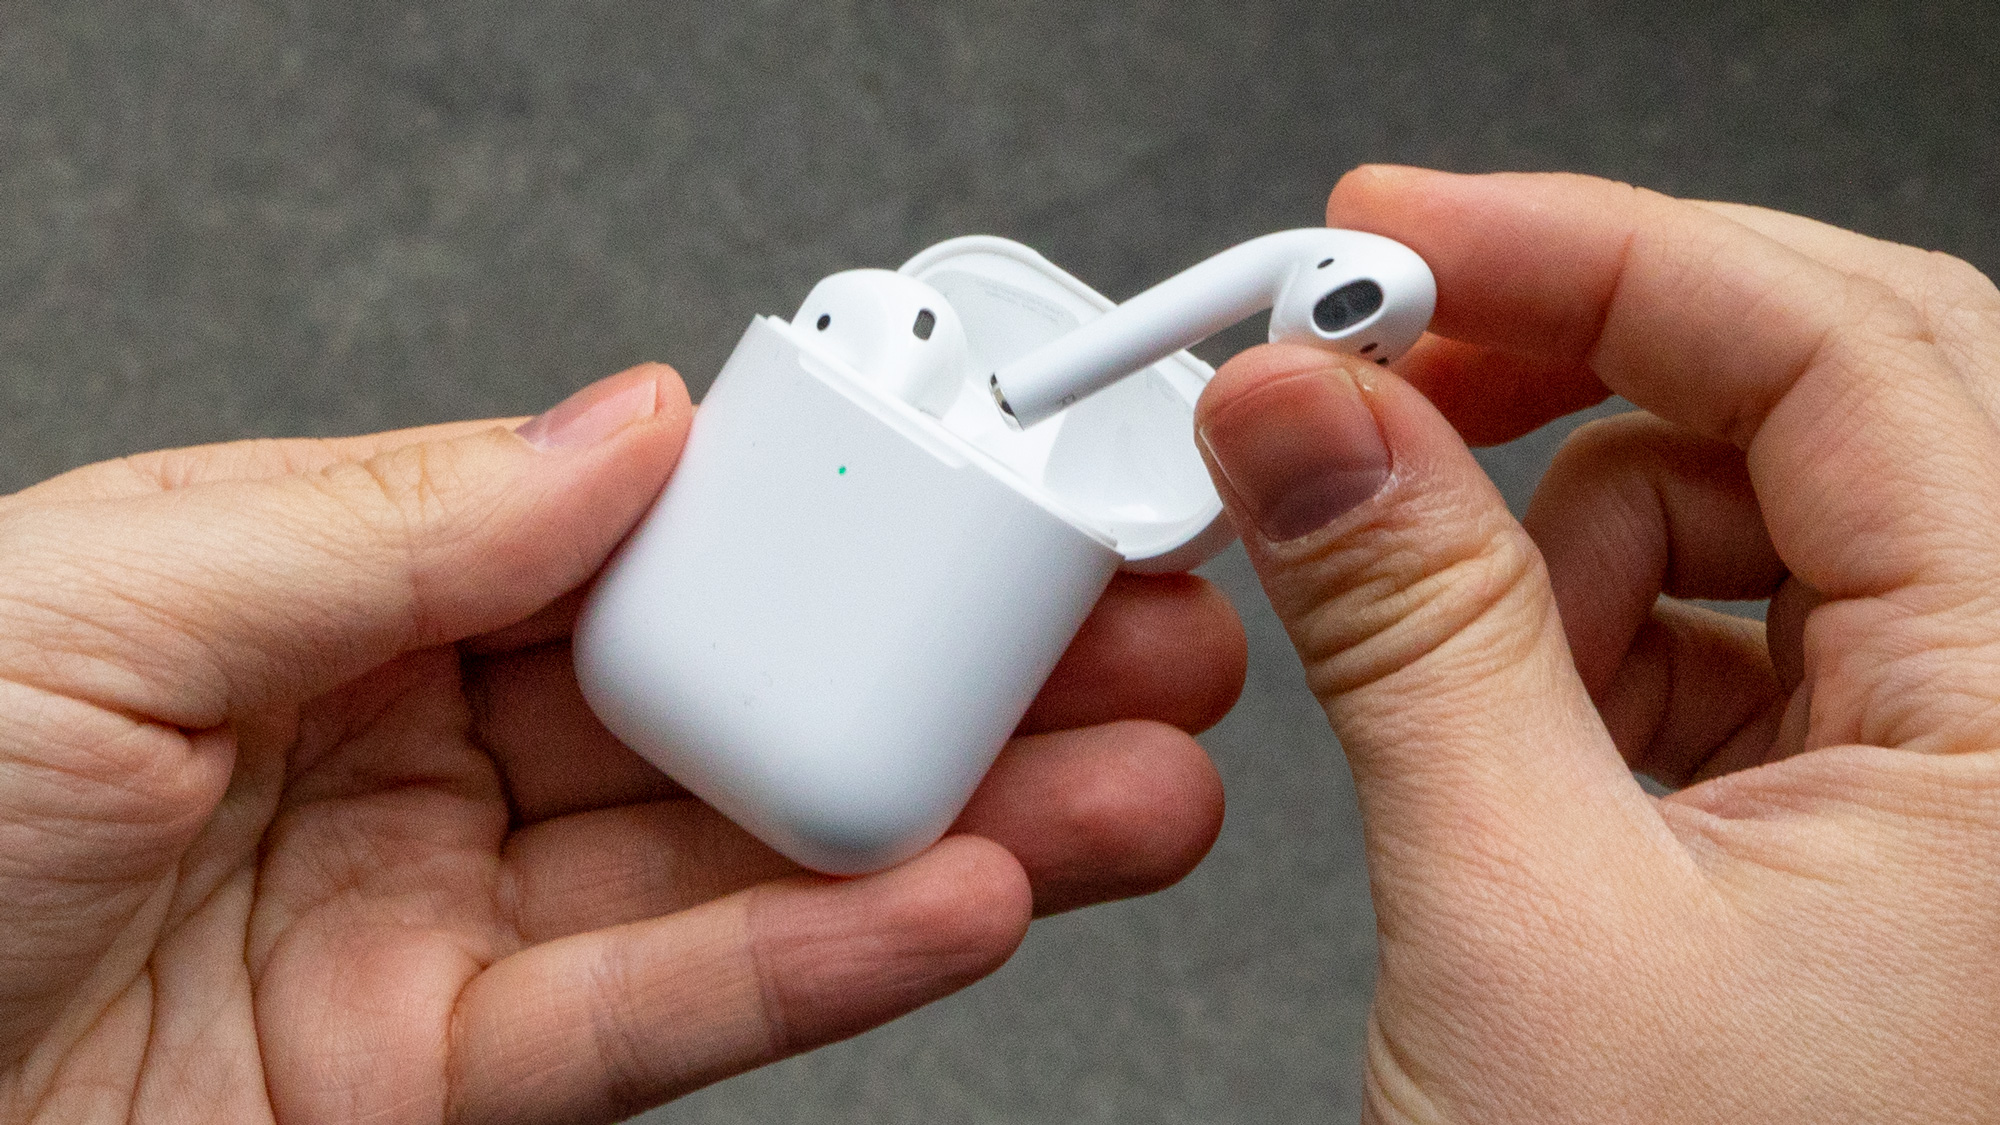 Apple AirPods true wireless earbuds